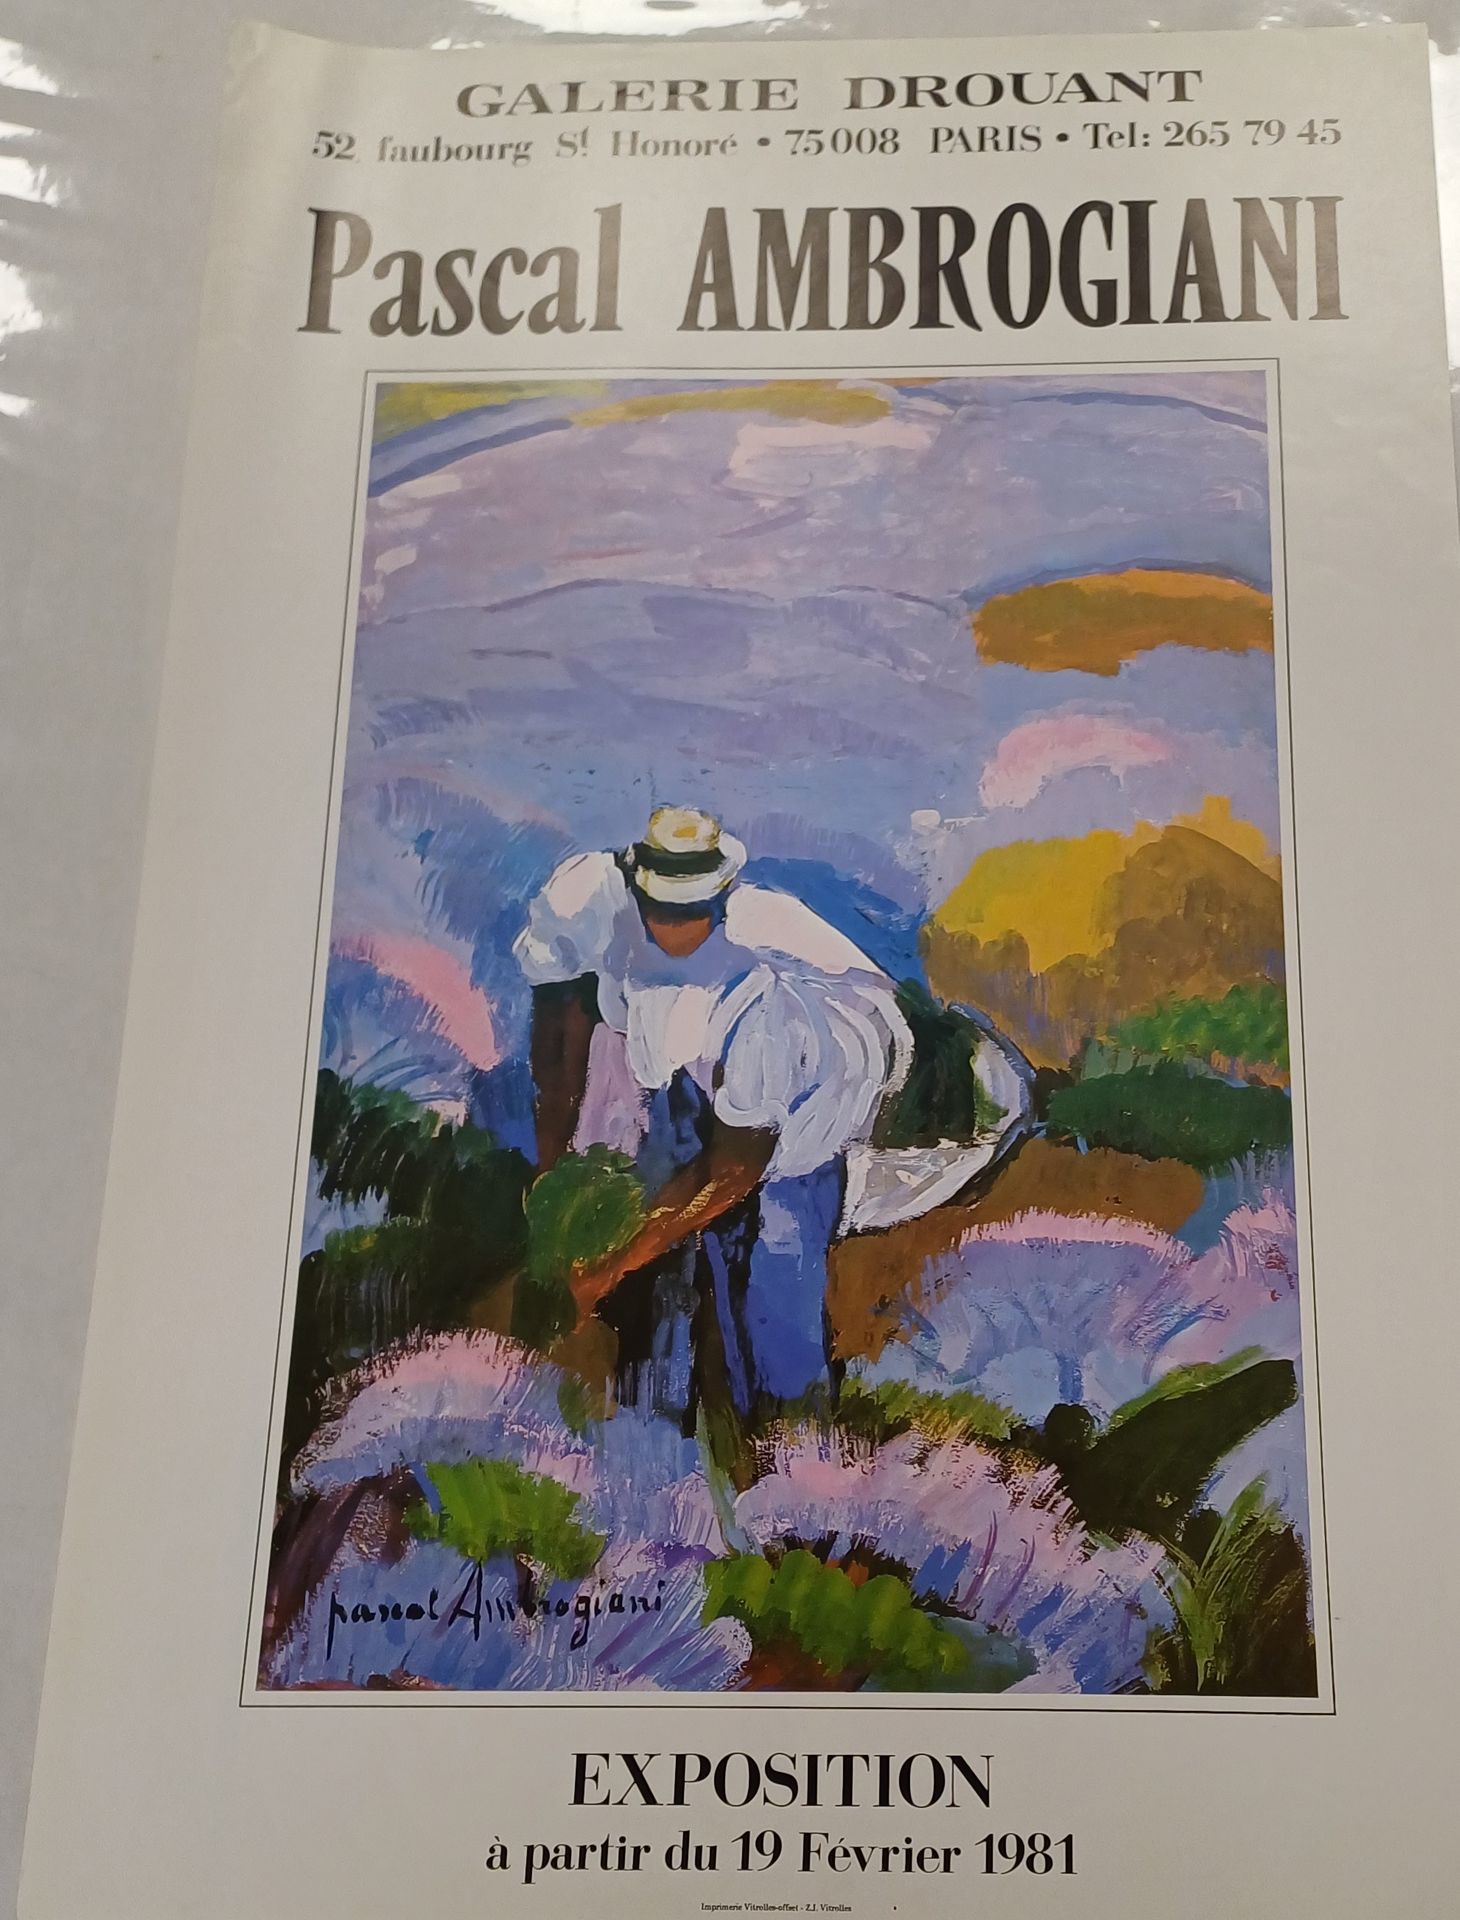 Ambrogiani Affiche Ambrogiani
Galerie Drouant 1981
60 x 40 cm